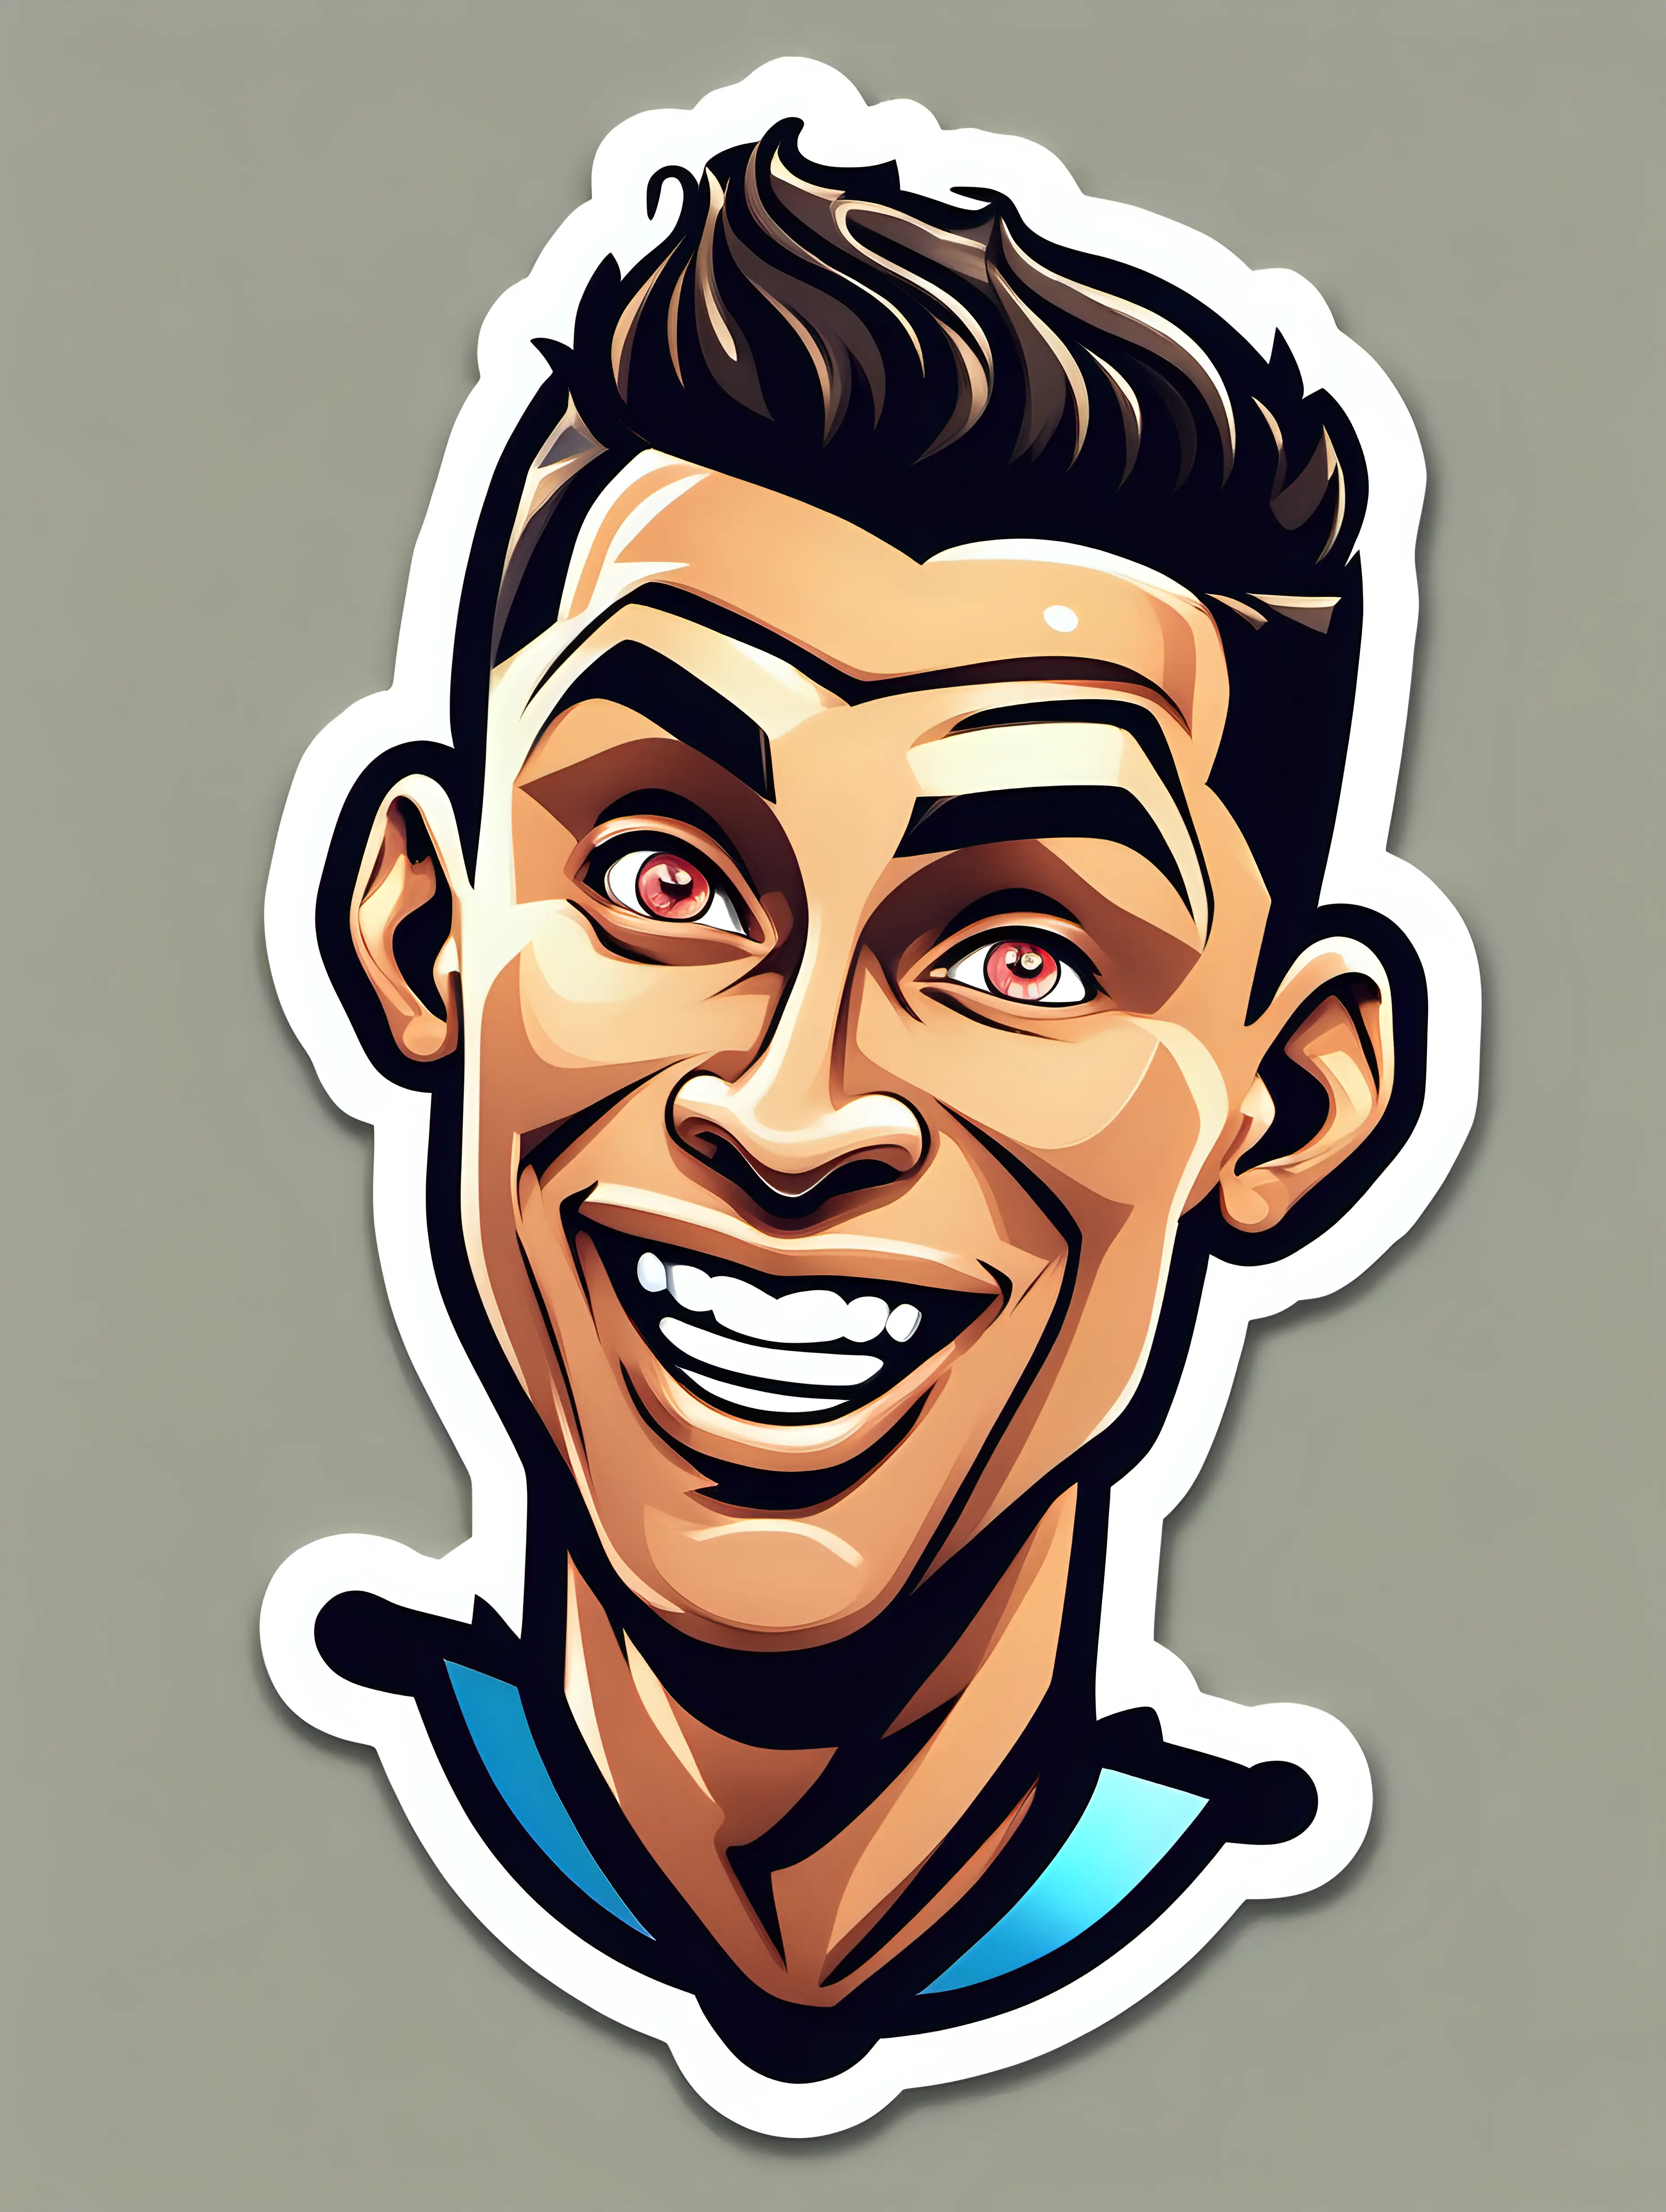 Cristiano Ronaldos Iconic Suii Celebration in Vibrant Cartoon Sticker Style